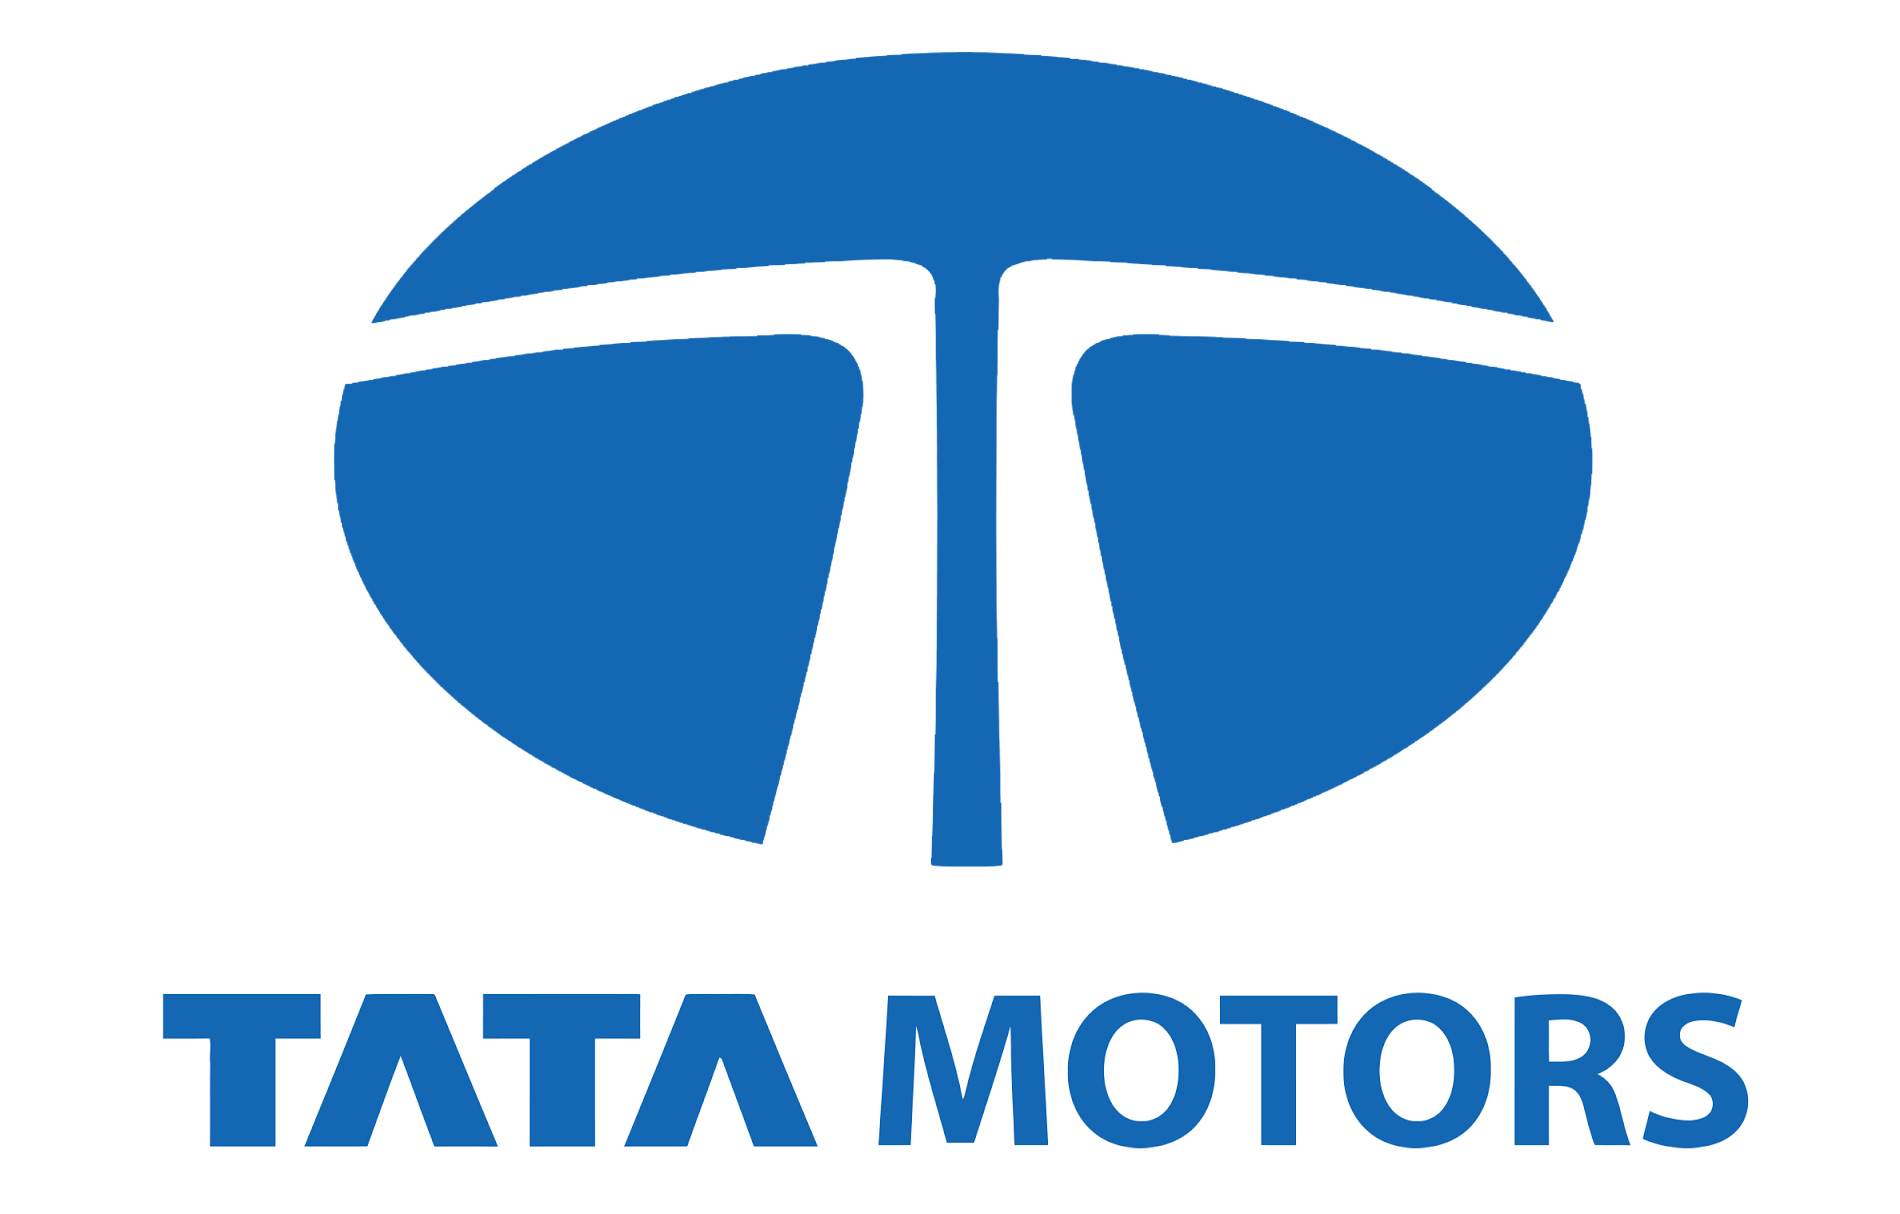 Tata Motors Cars Showroom - Highway Wheels|Show Room|Automotive